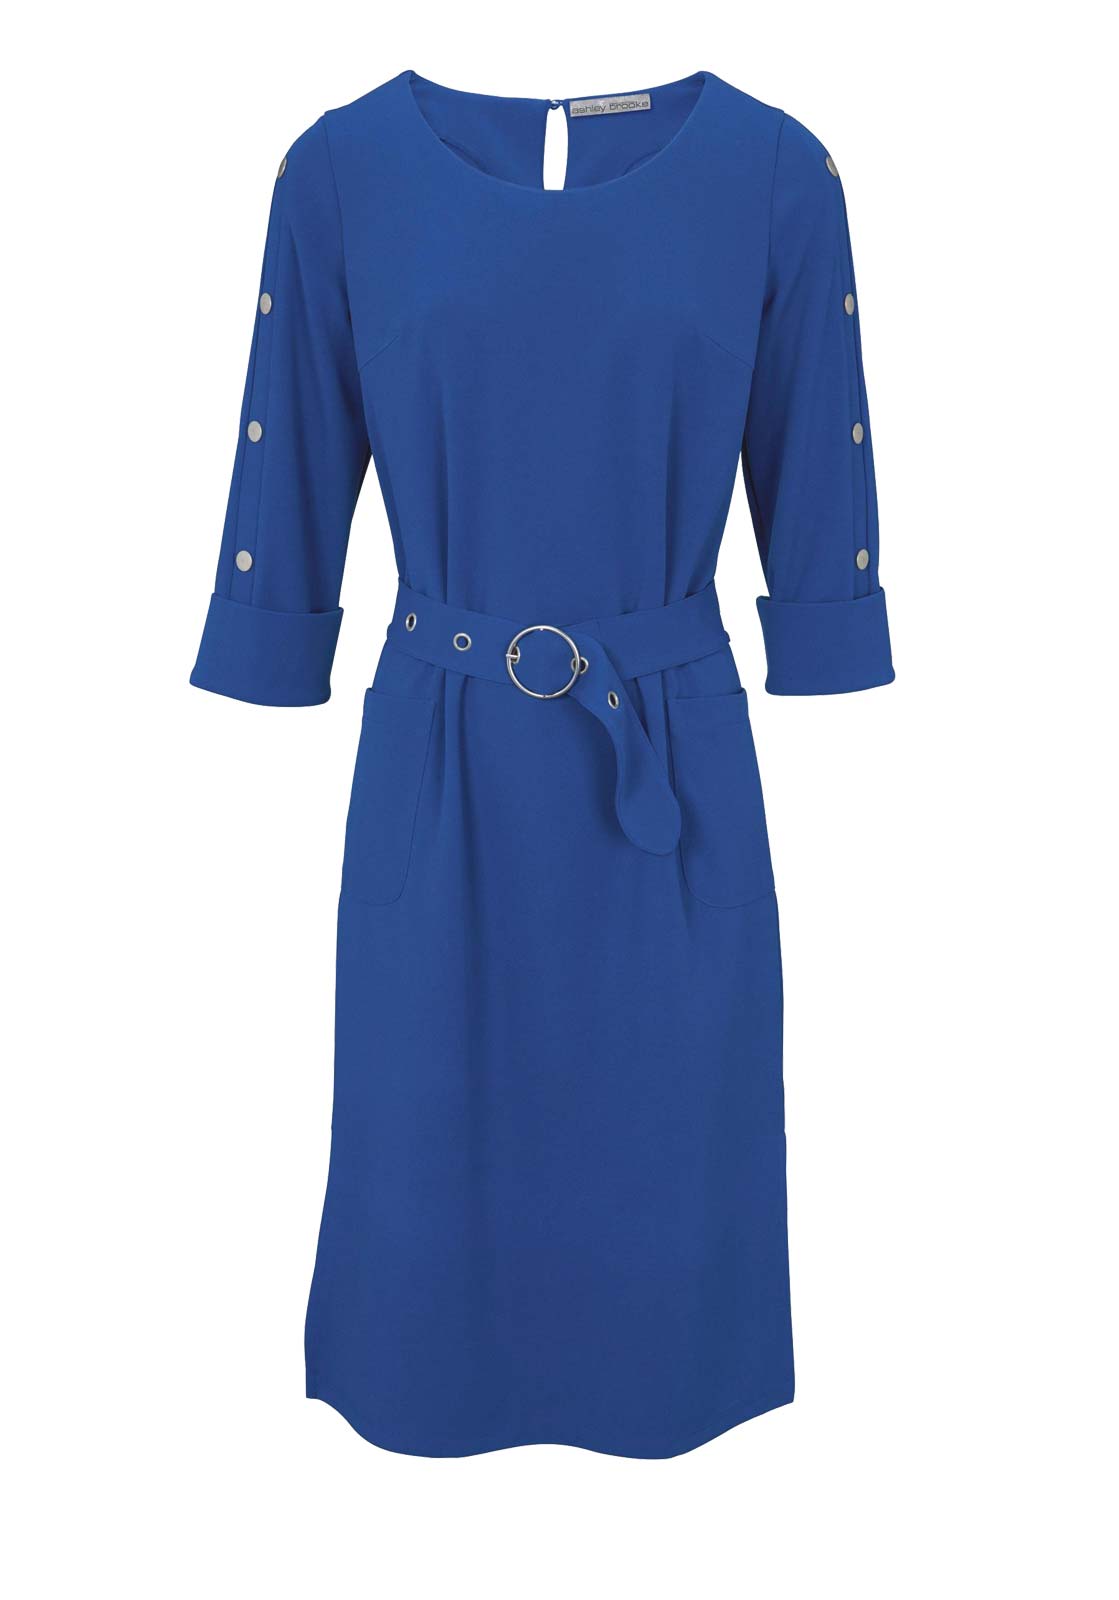 Ashley Brooke Damen Designer-Kleid, azurblau